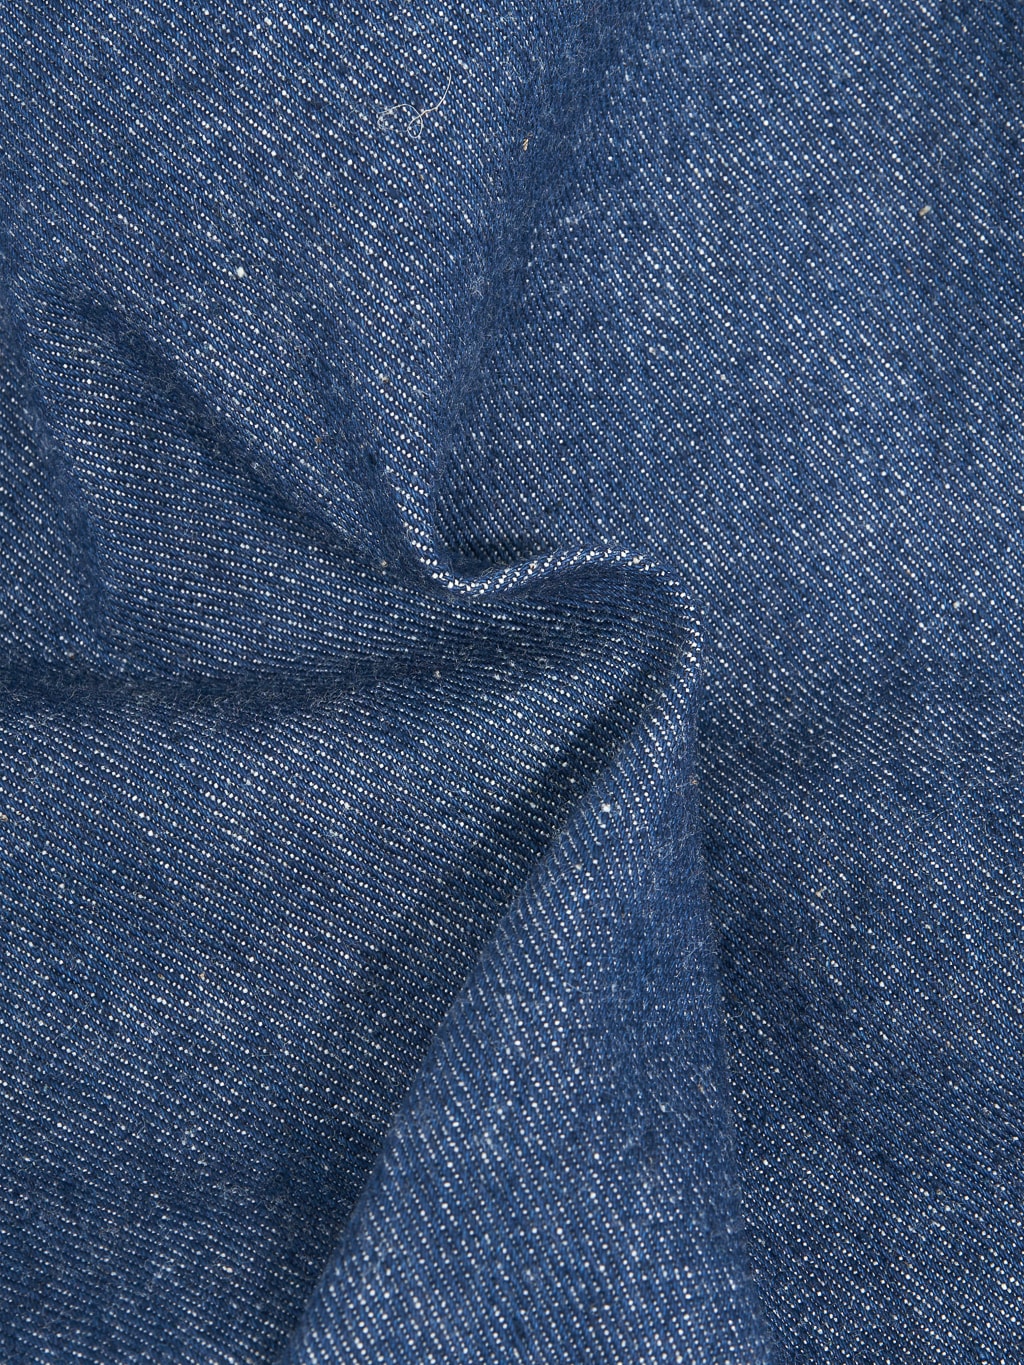 fullcount 1121 duke original selvedge denim super wide jeans texture